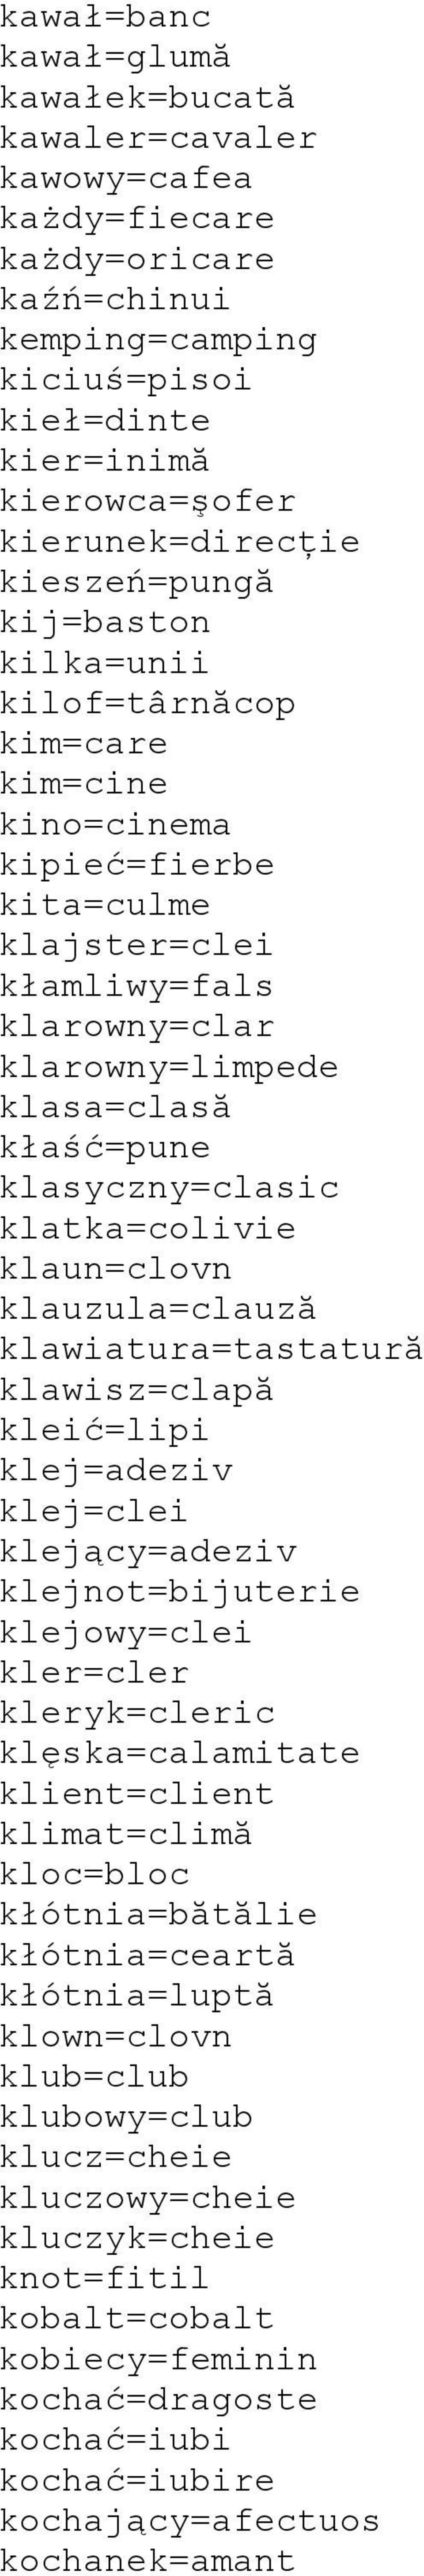 klasyczny=clasic klatka=colivie klaun=clovn klauzula=clauză klawiatura=tastatură klawisz=clapă kleić=lipi klej=adeziv klej=clei klejący=adeziv klejnot=bijuterie klejowy=clei kler=cler kleryk=cleric